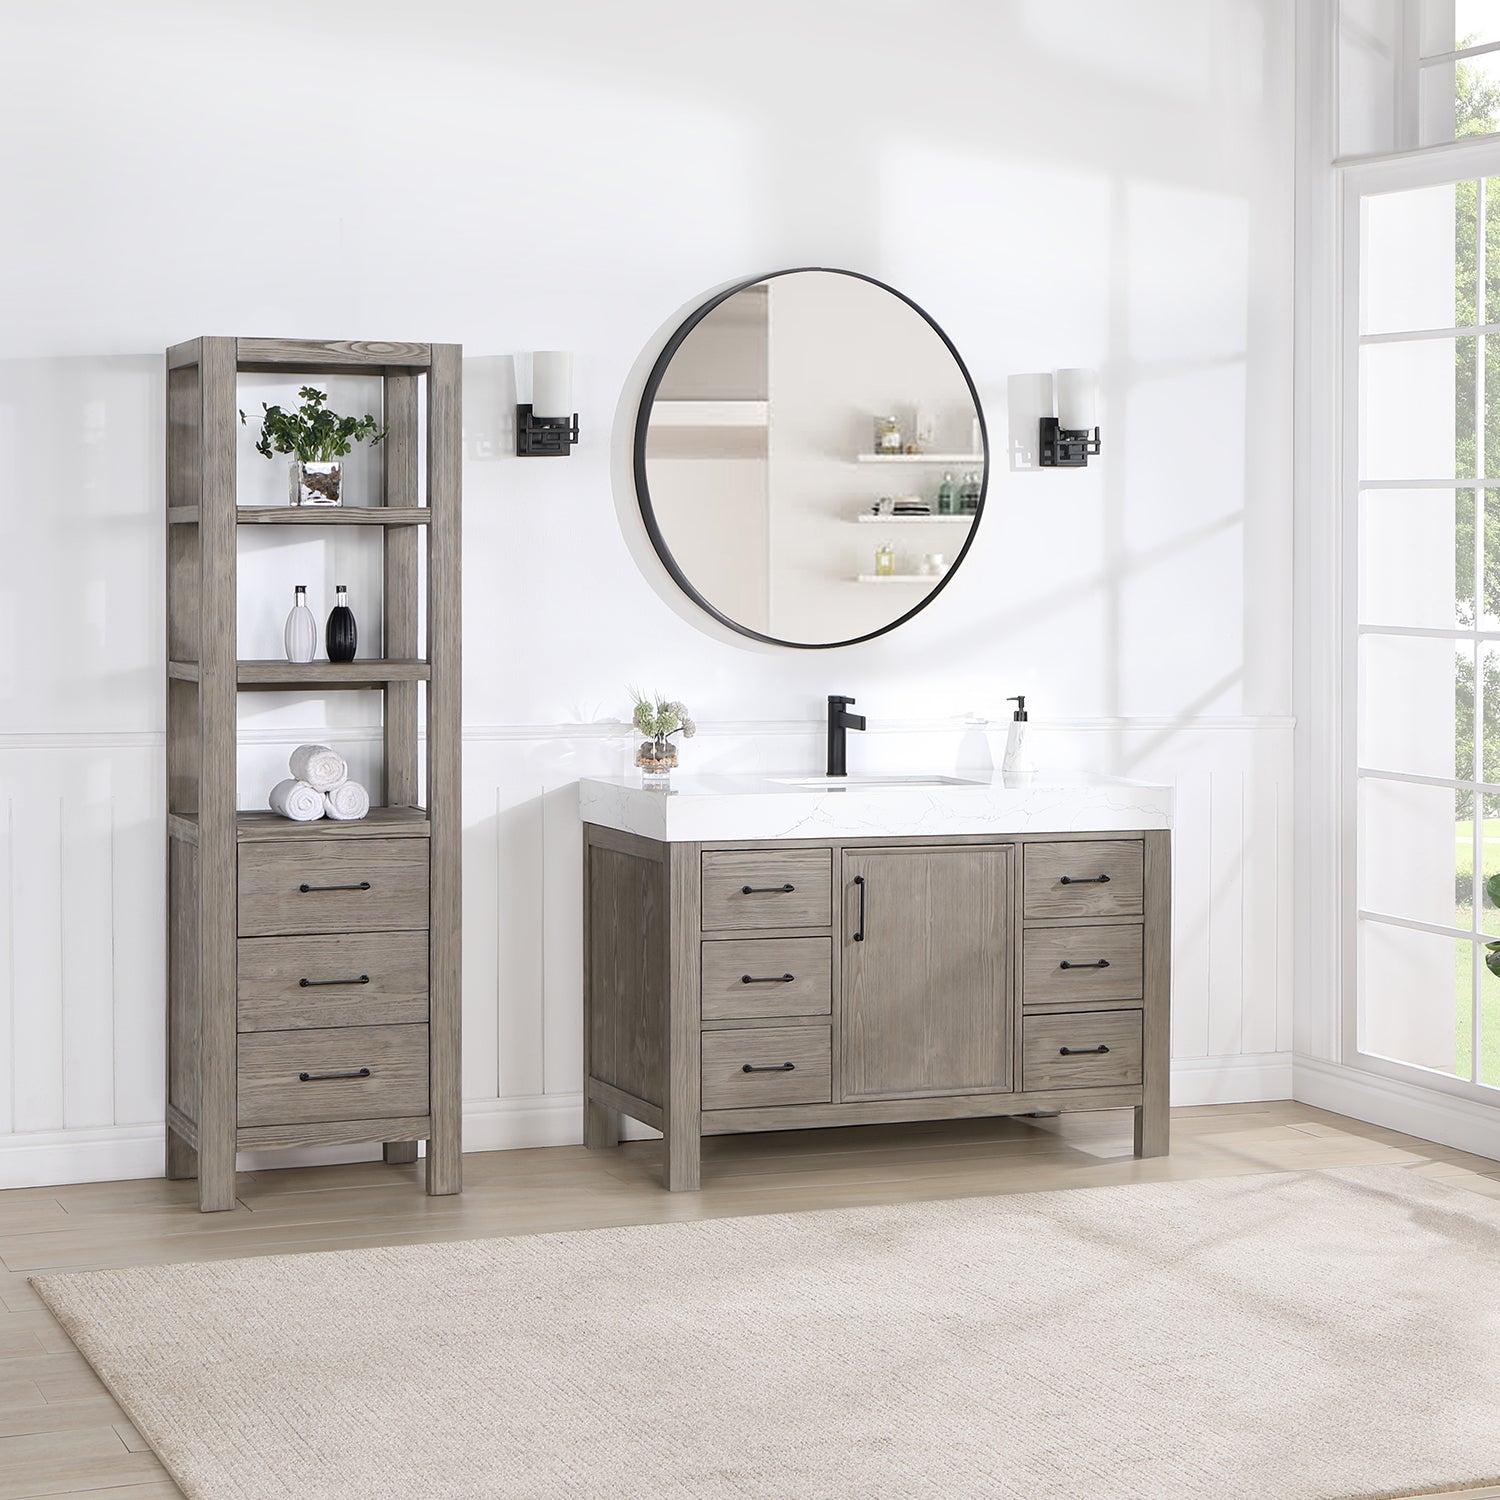 Vinnova Design León 48in. Free standing Single Bathroom Vanity in Fir Wood Grey with Composite top in Lightning White - New Star Living